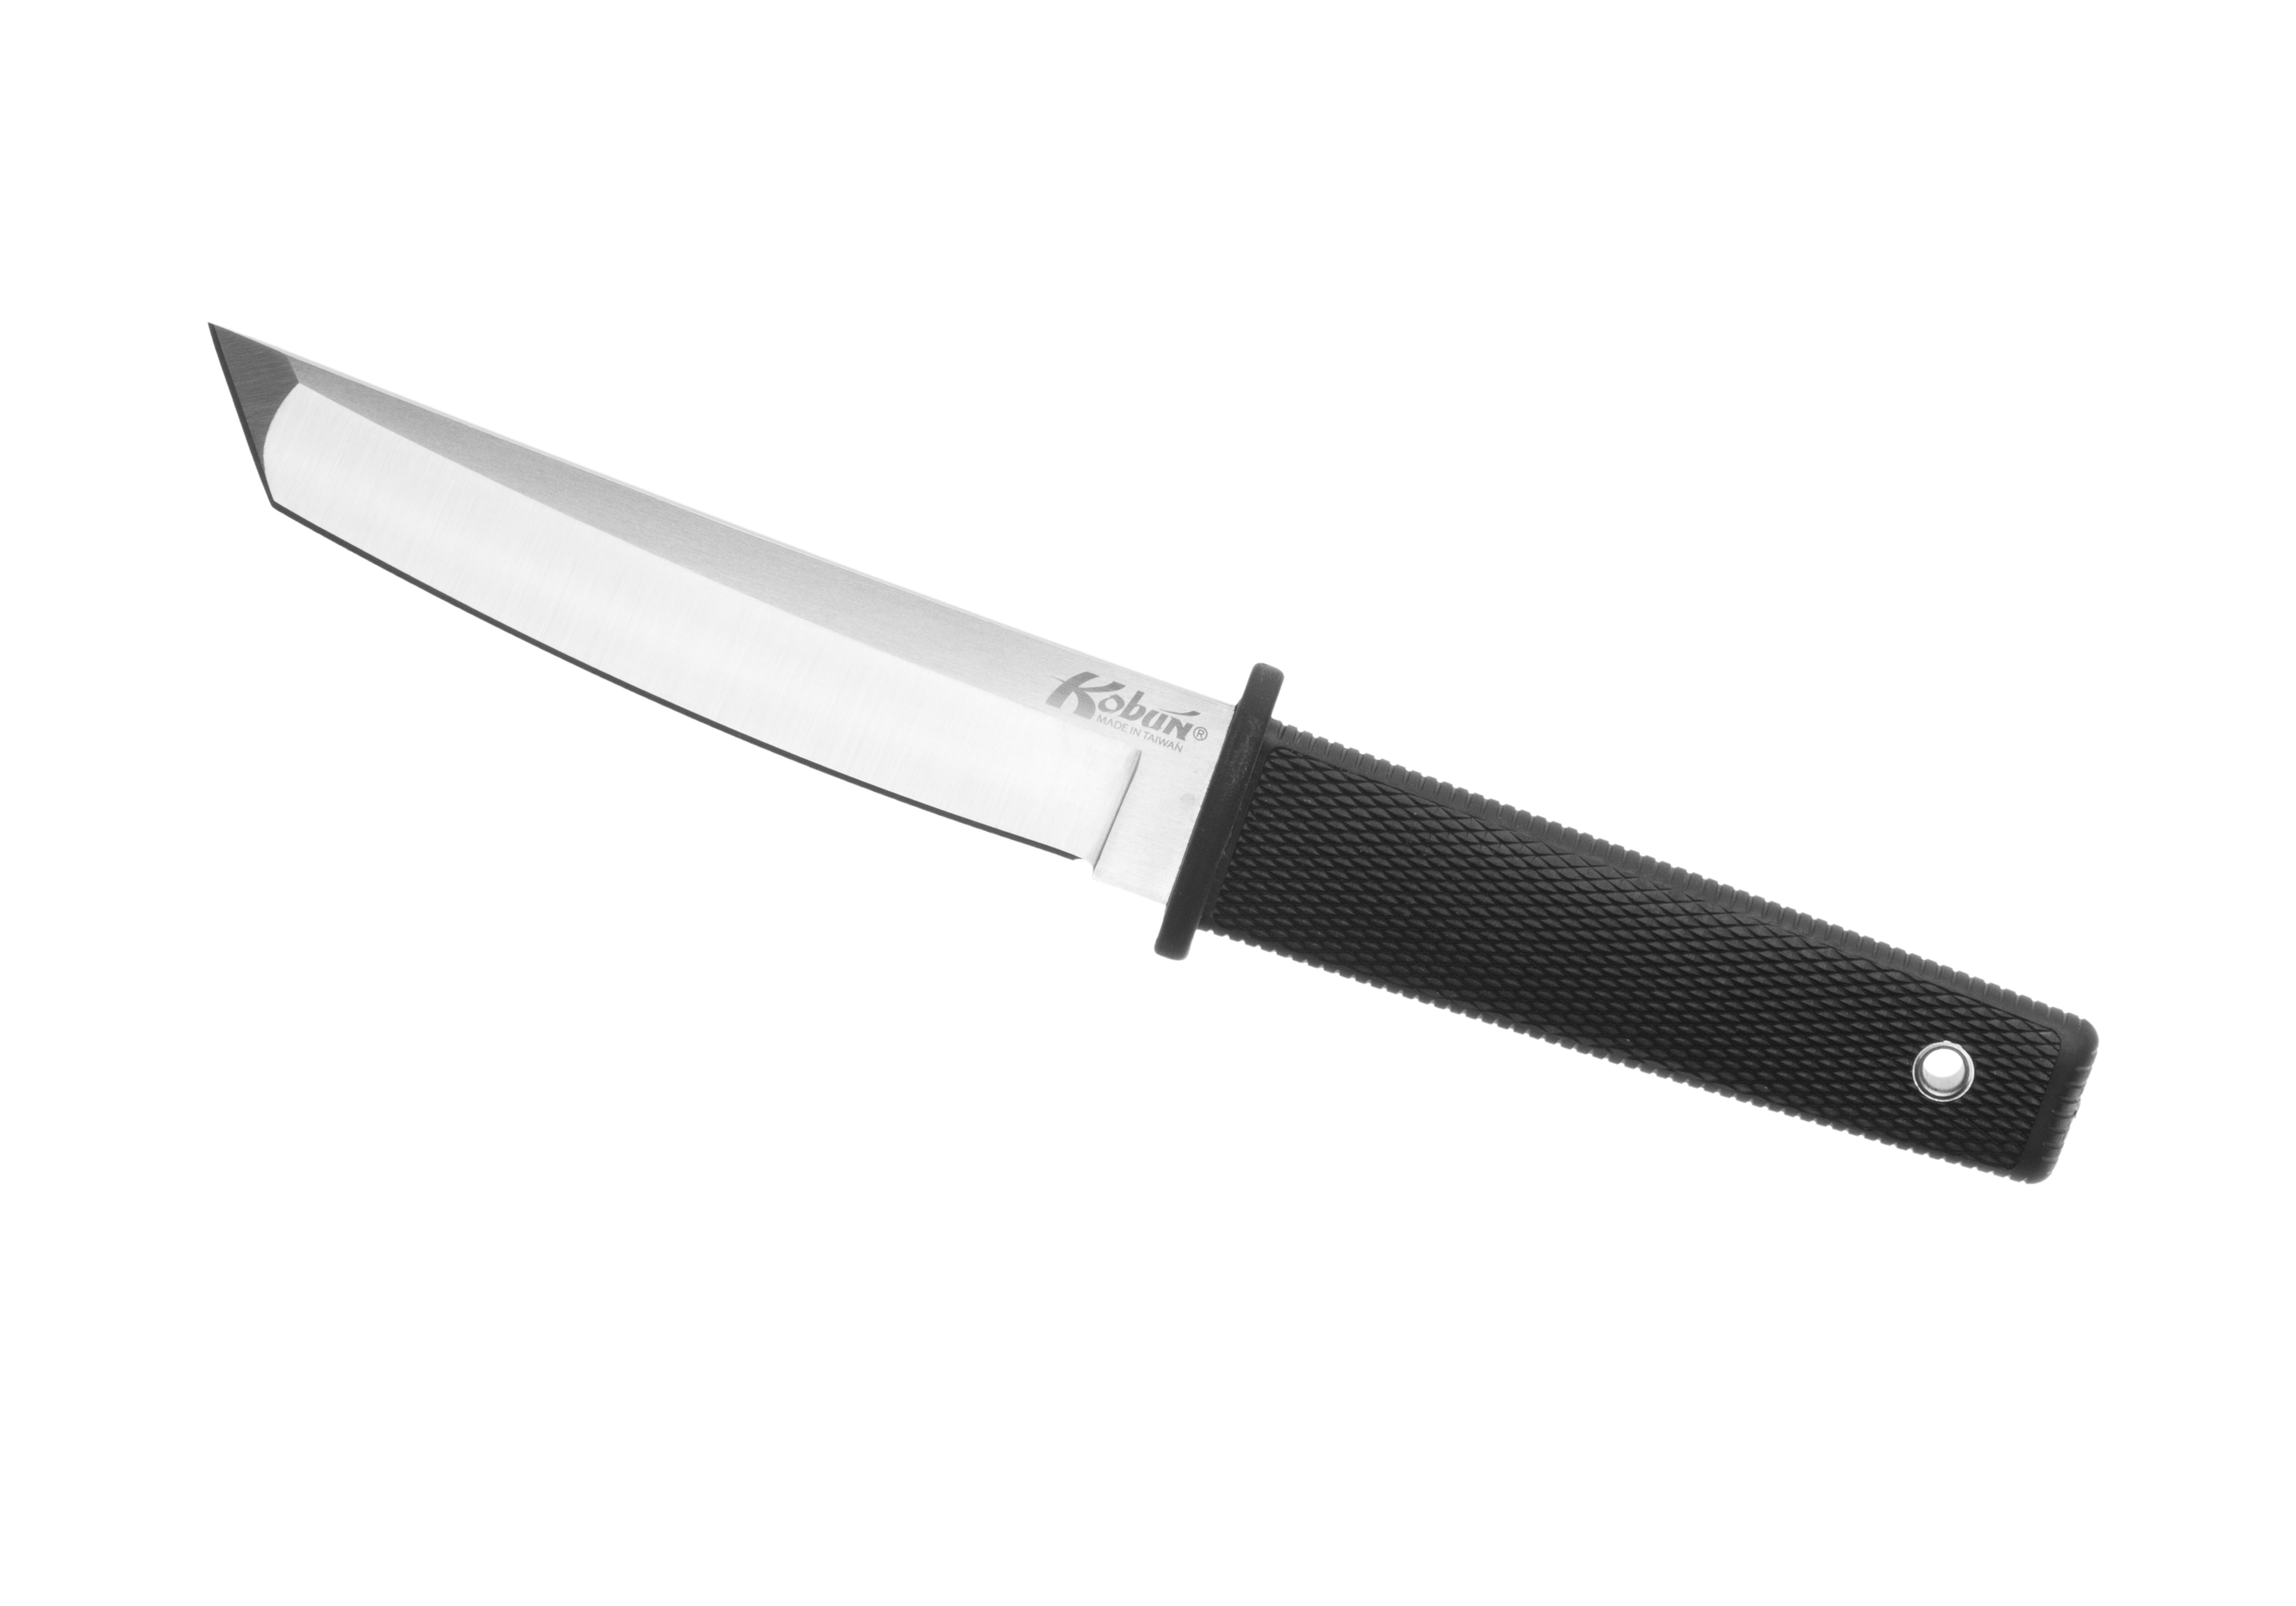 Kershaw Ultra-Tek Knife Sharpener (2023) - Airsoftzone